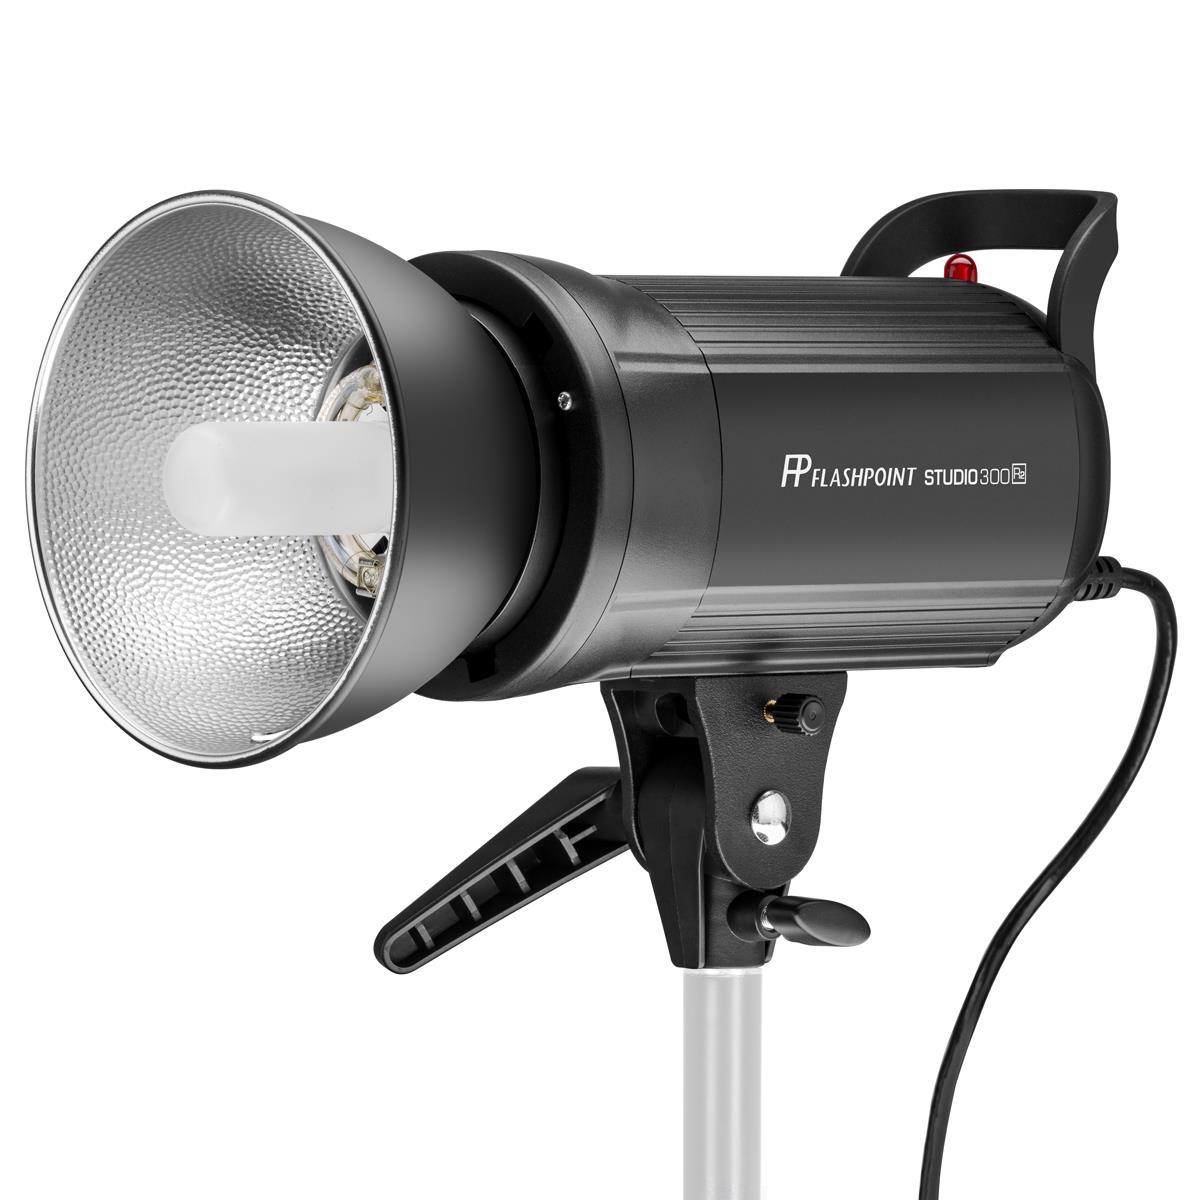 Image of Flashpoint Studio 300 Monolight with Built-in R2 Radio